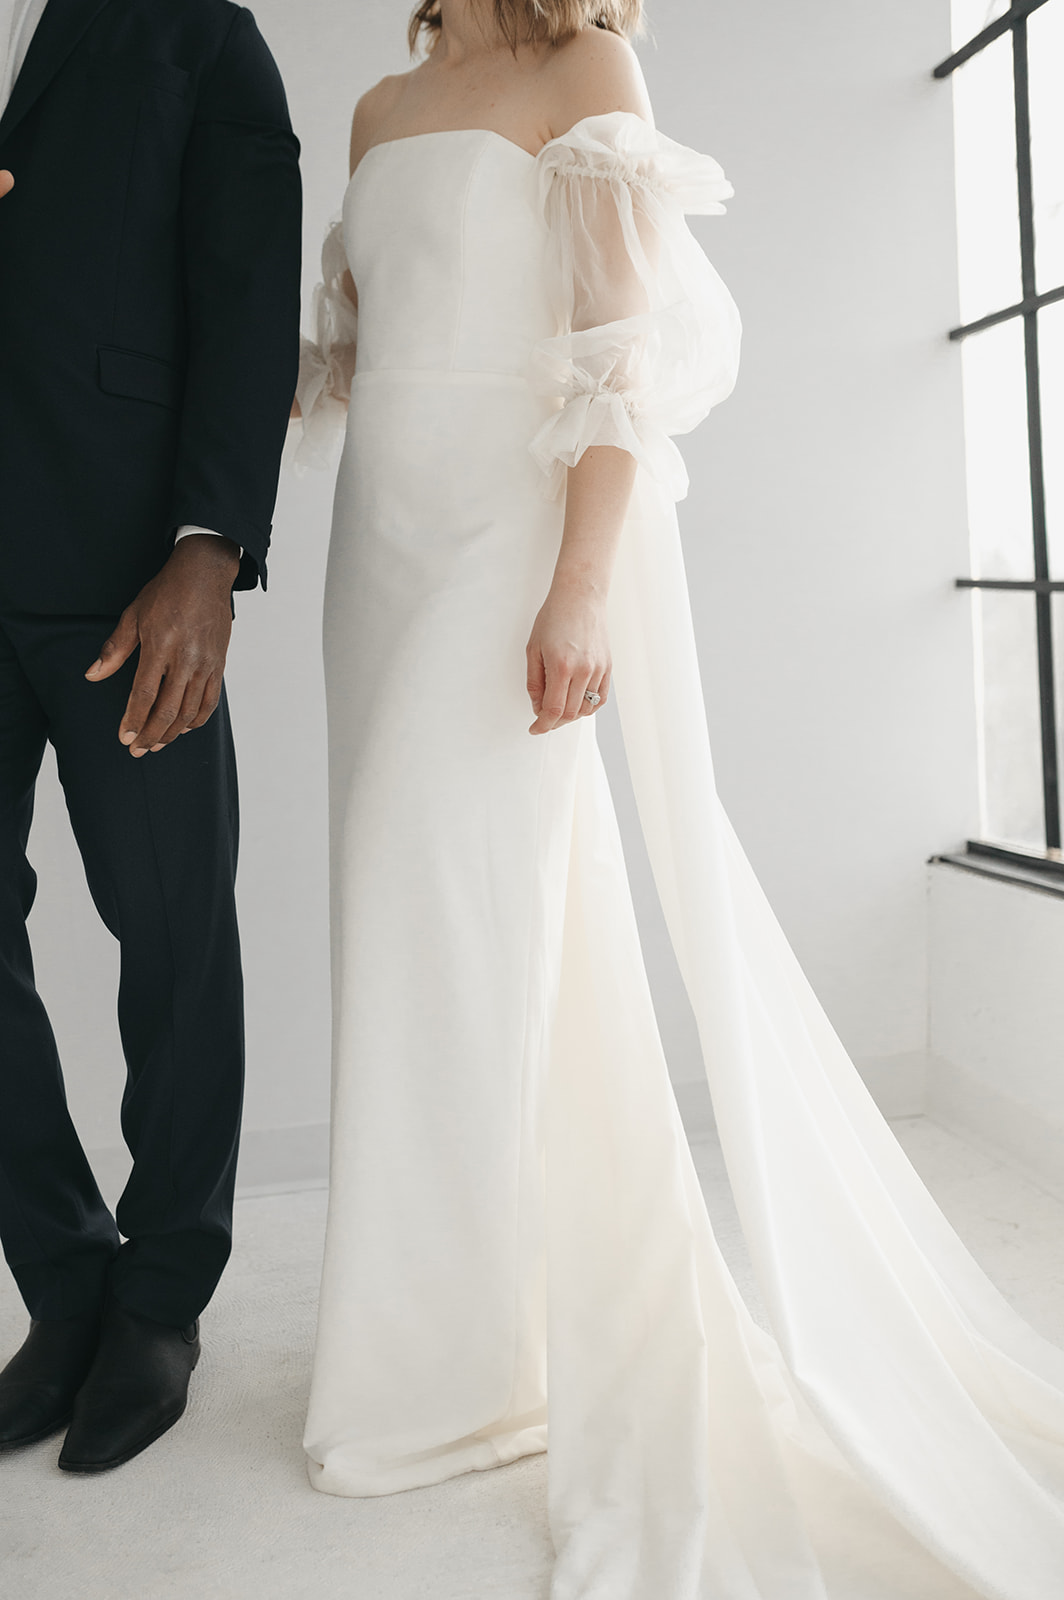 Chic neutral minimalist wedding inspiration, neutral wedding colour scheme, chic bridal Inspo
